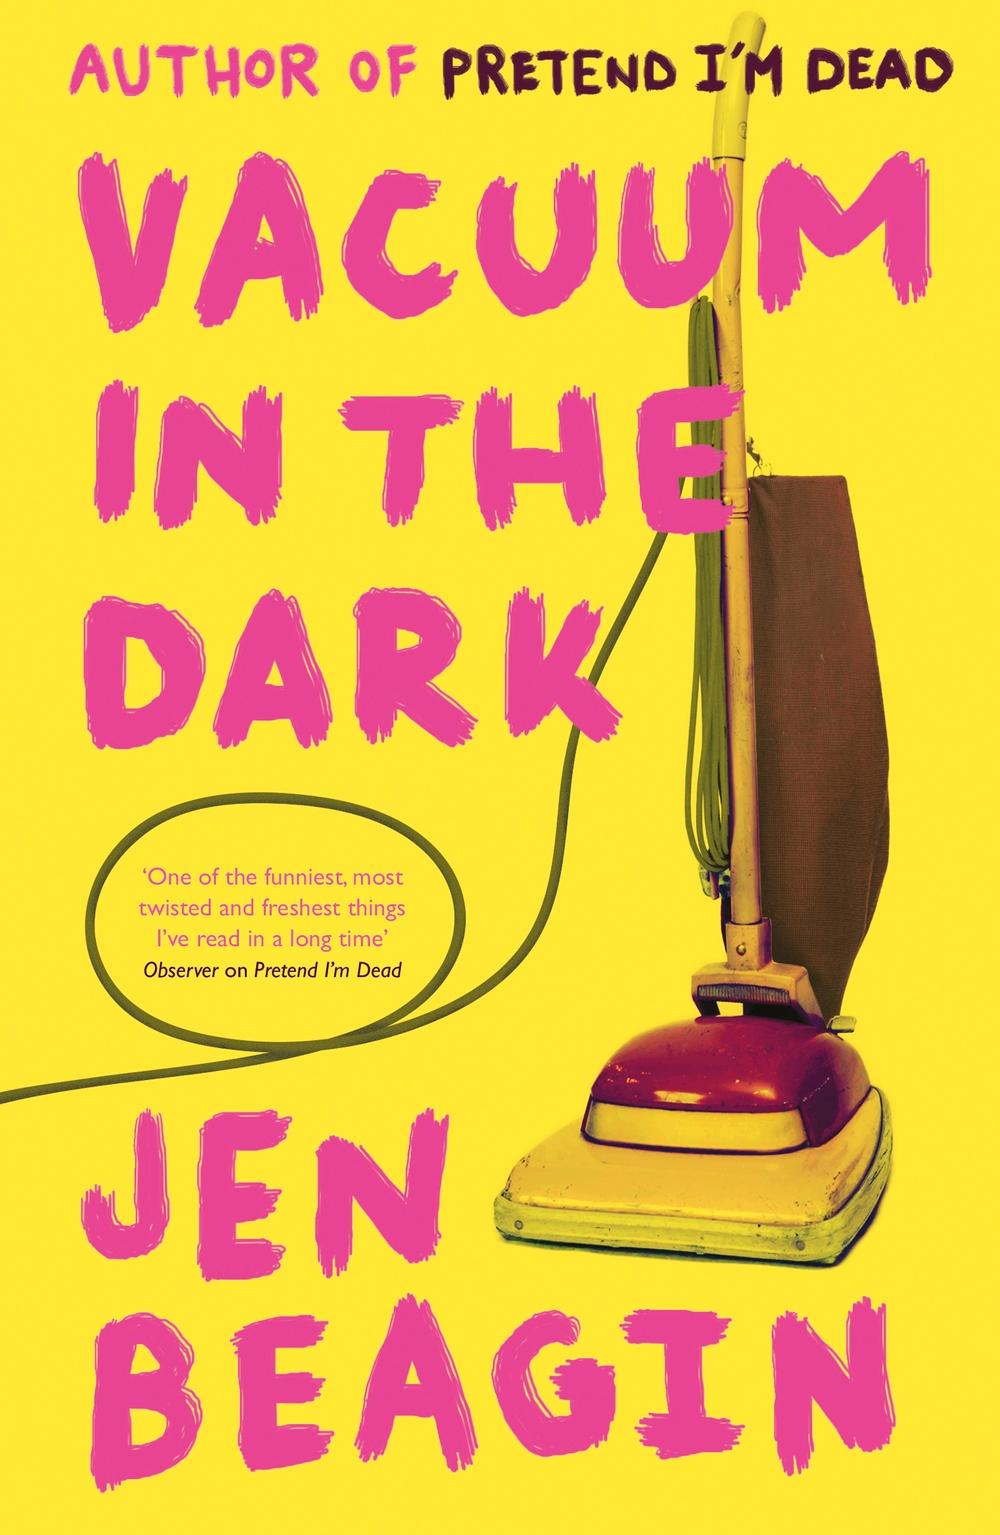 Vacuum in the Dark - Jen Beagin